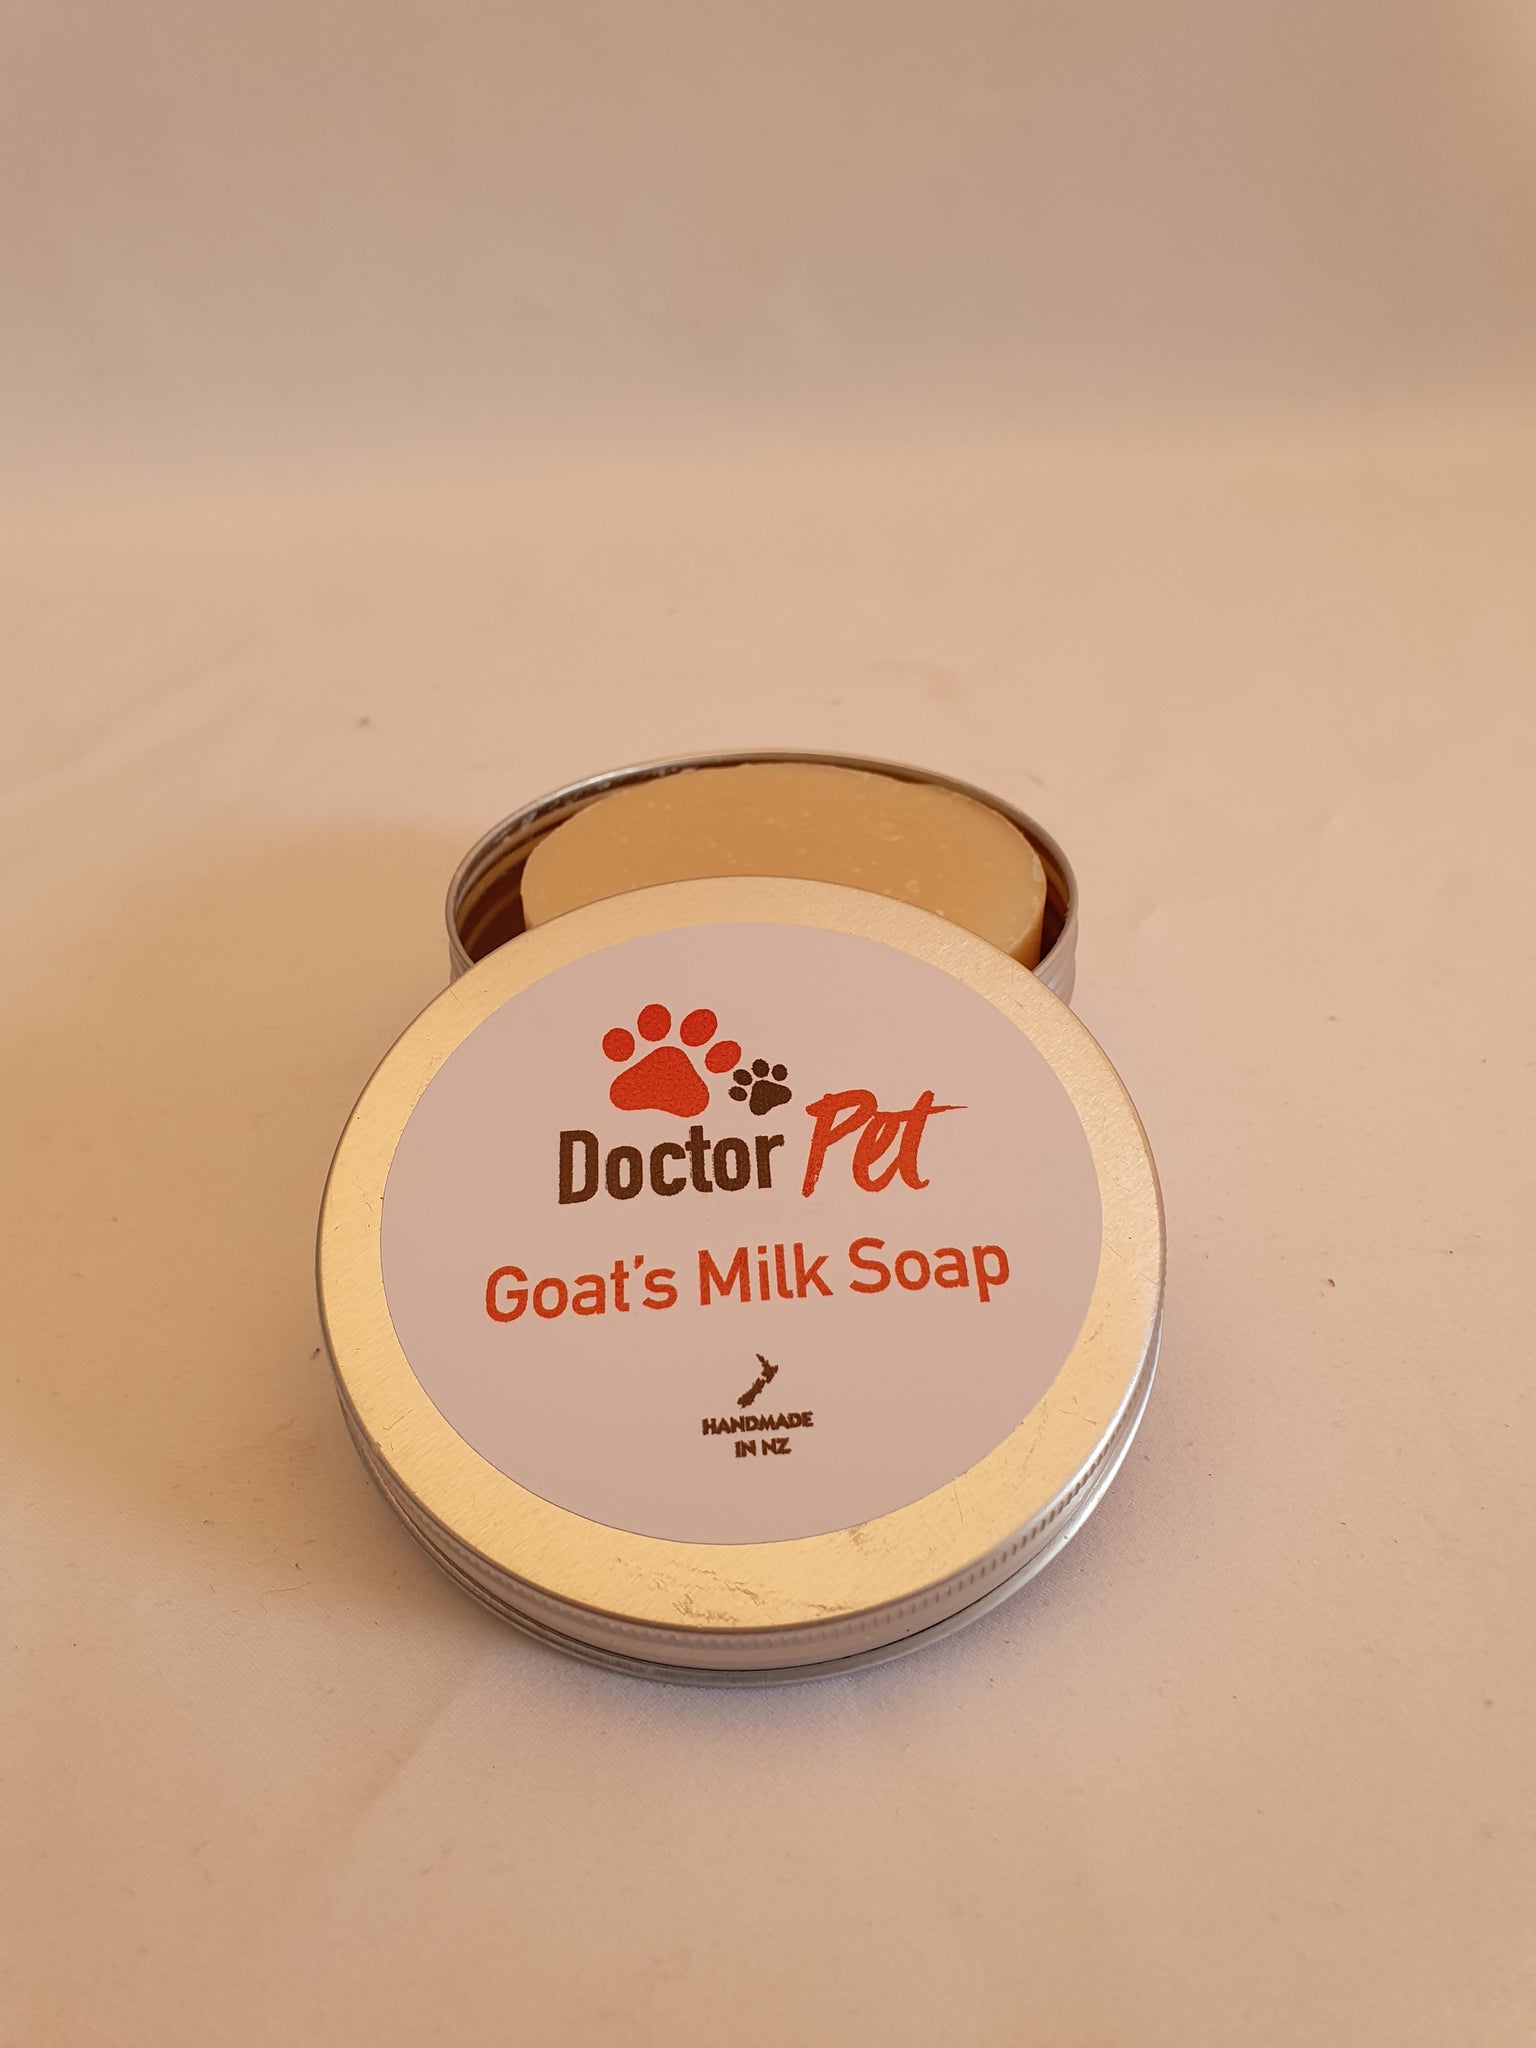 Goat's Milk Soap for Pets